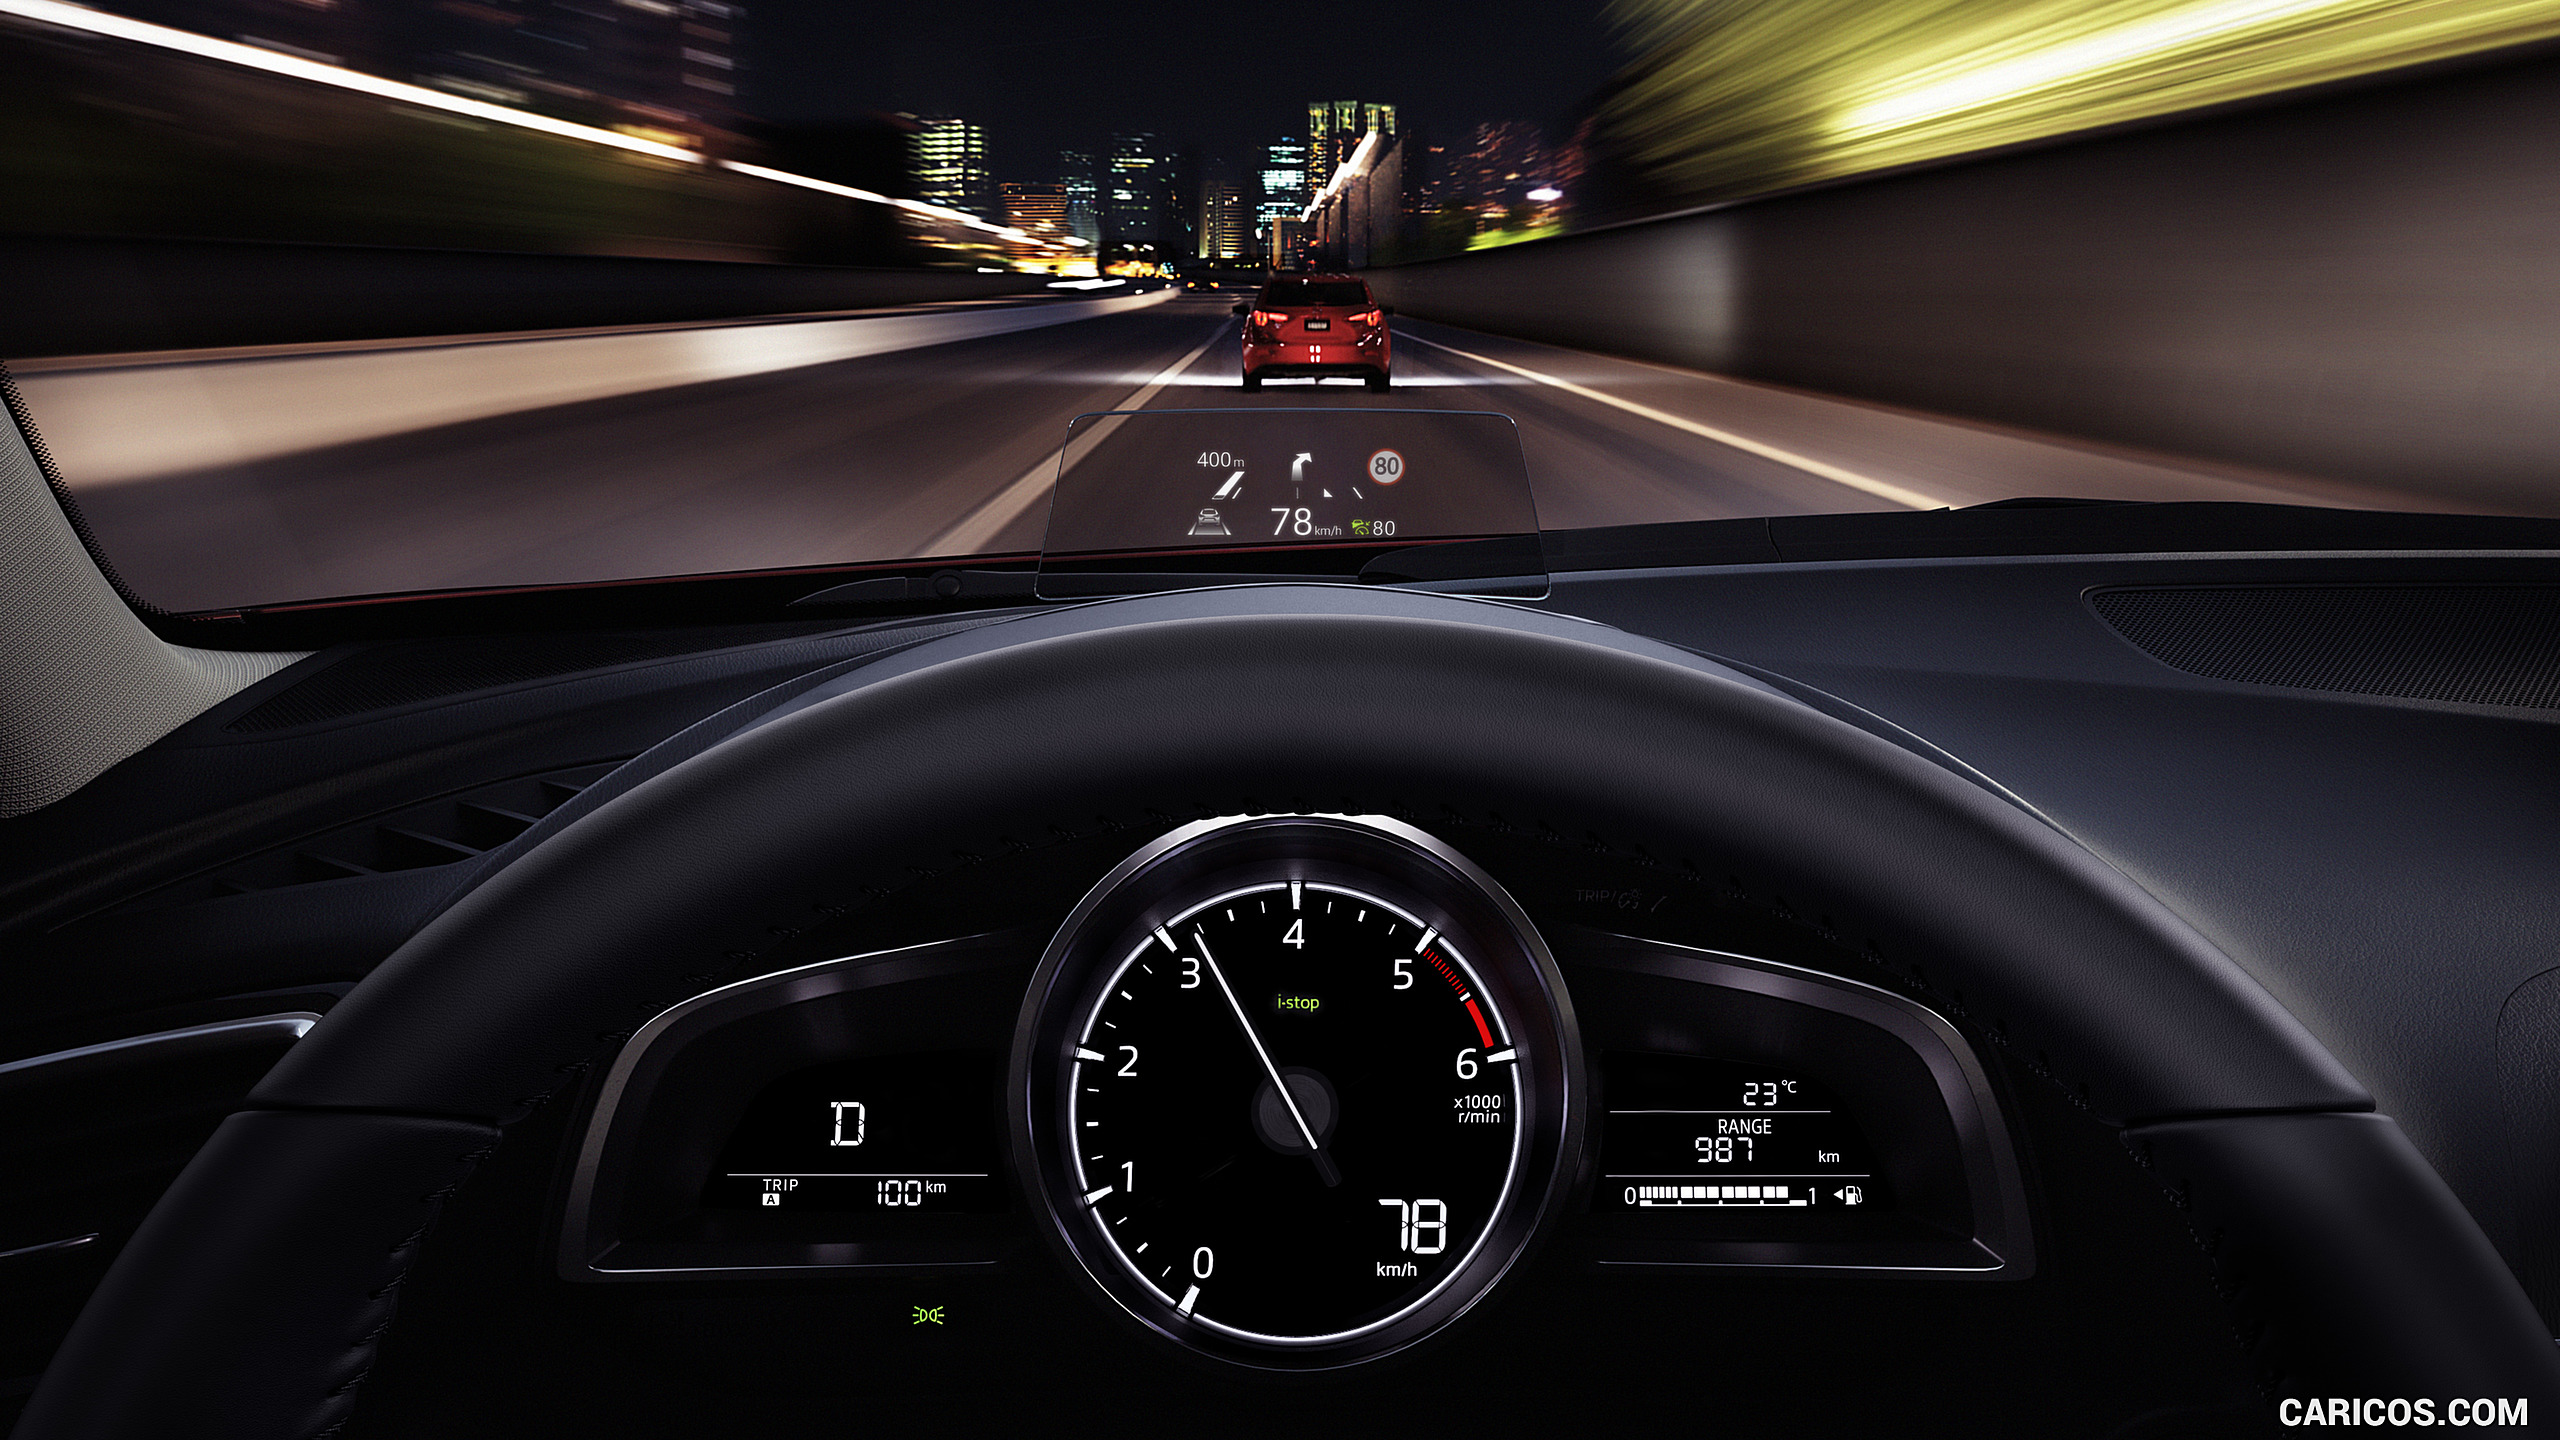 2017 Mazda 3 Sedan - Interior, Head-Up Display, #9 of 13